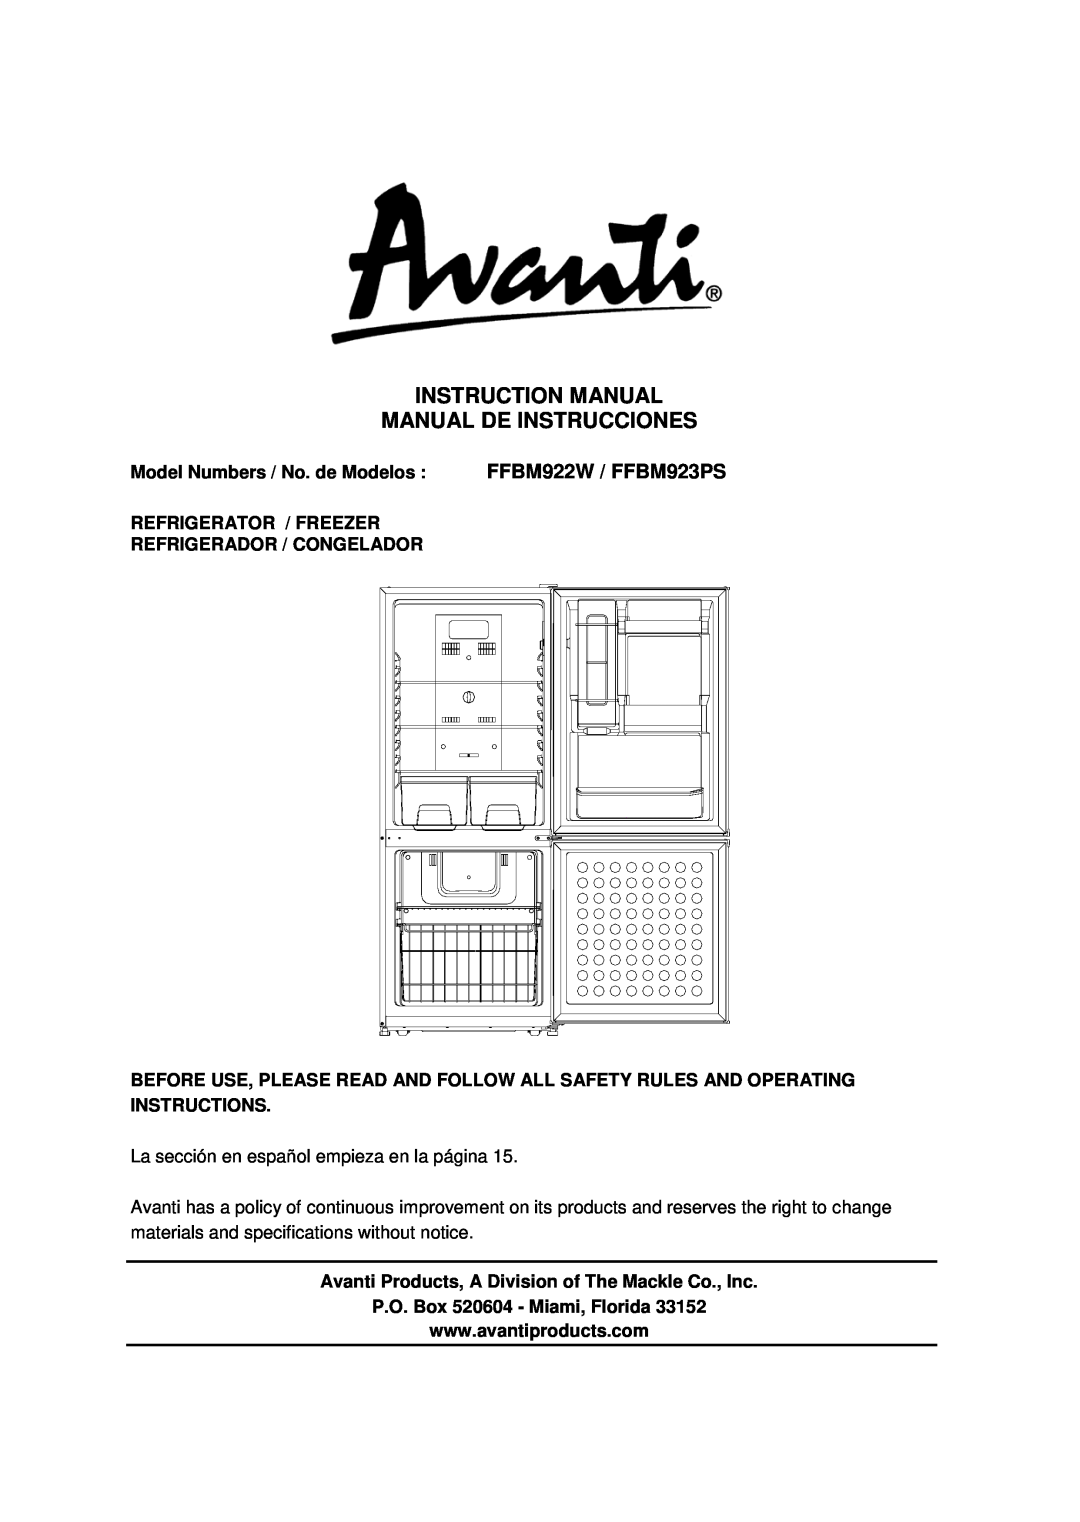 Avanti instruction manual FFBM922W / FFBM923PS, Model Numbers / No. de Modelos, P.O. Box 520604 - Miami, Florida 